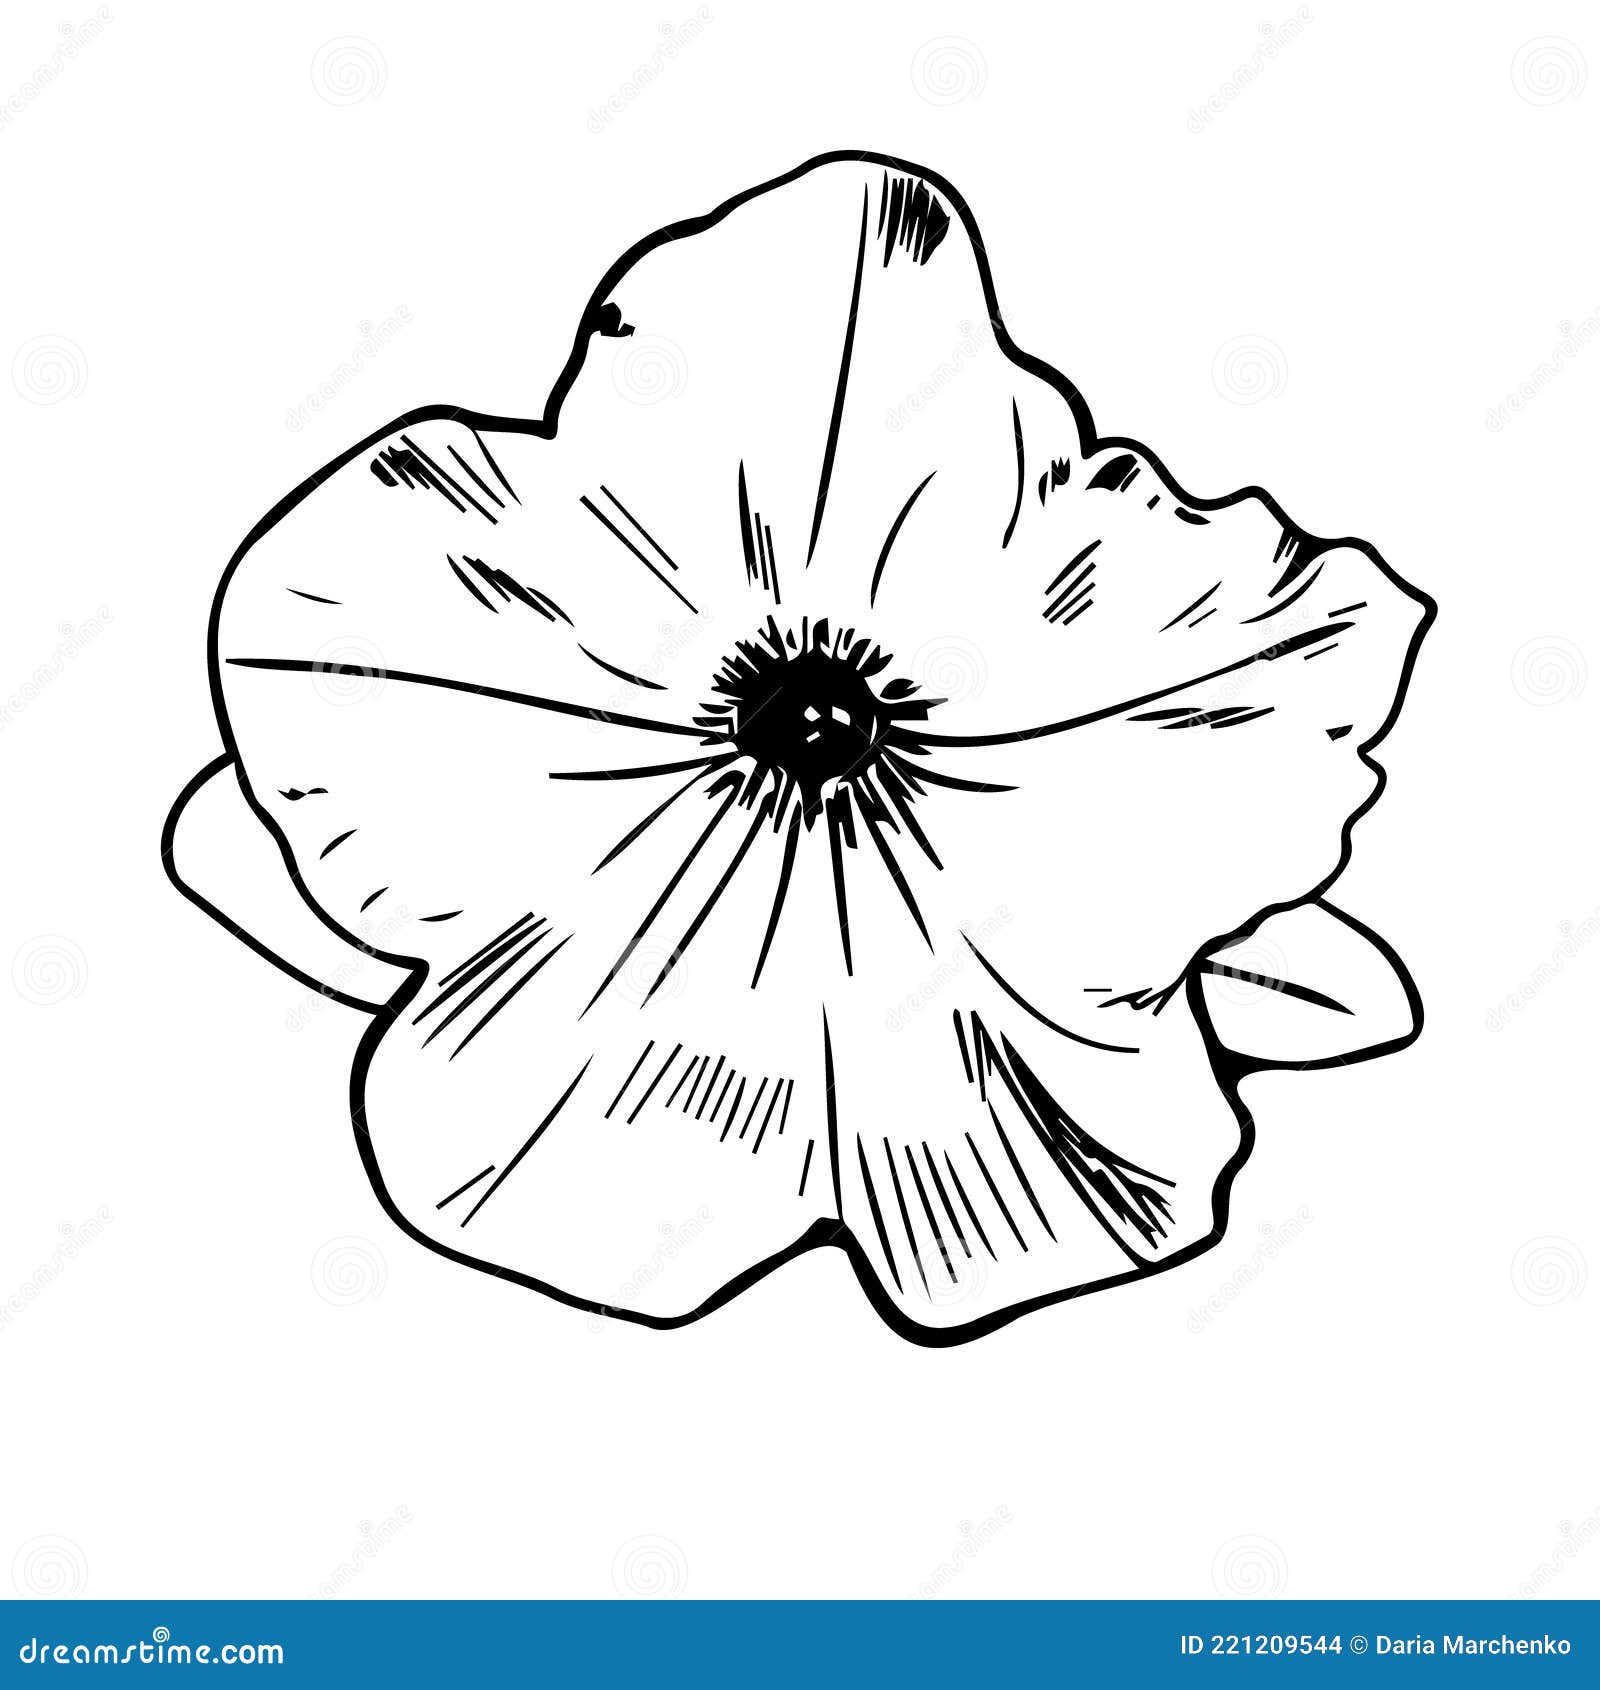 Details 83+ petunia flower sketch latest - in.eteachers